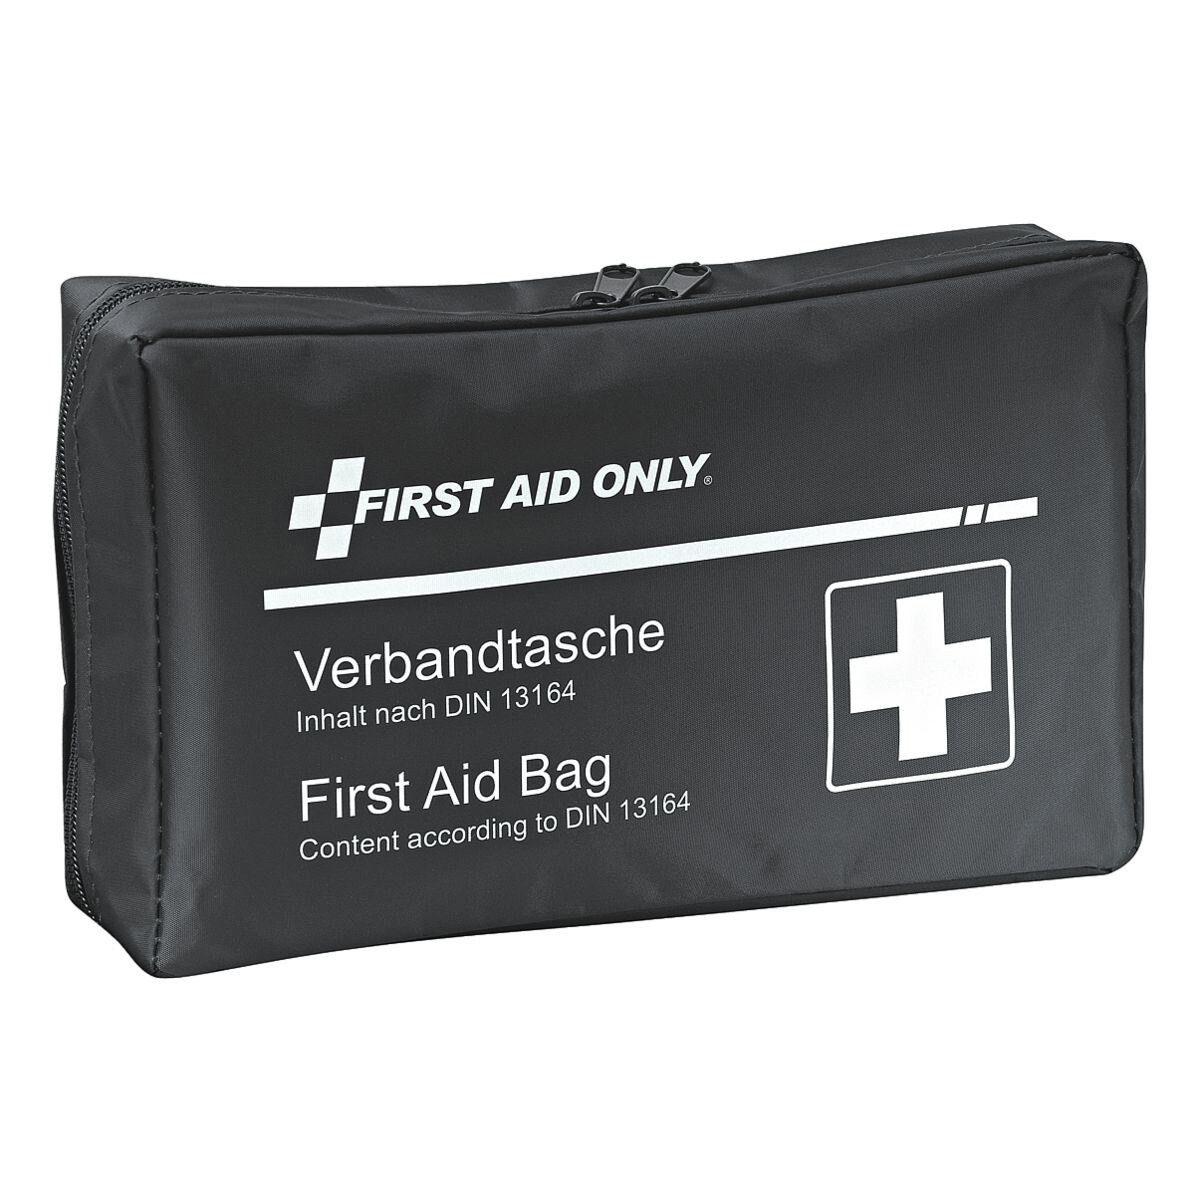 FIRST AID ONLY® KFZ-Verbandtasche, gefüllt, DIN 13 164